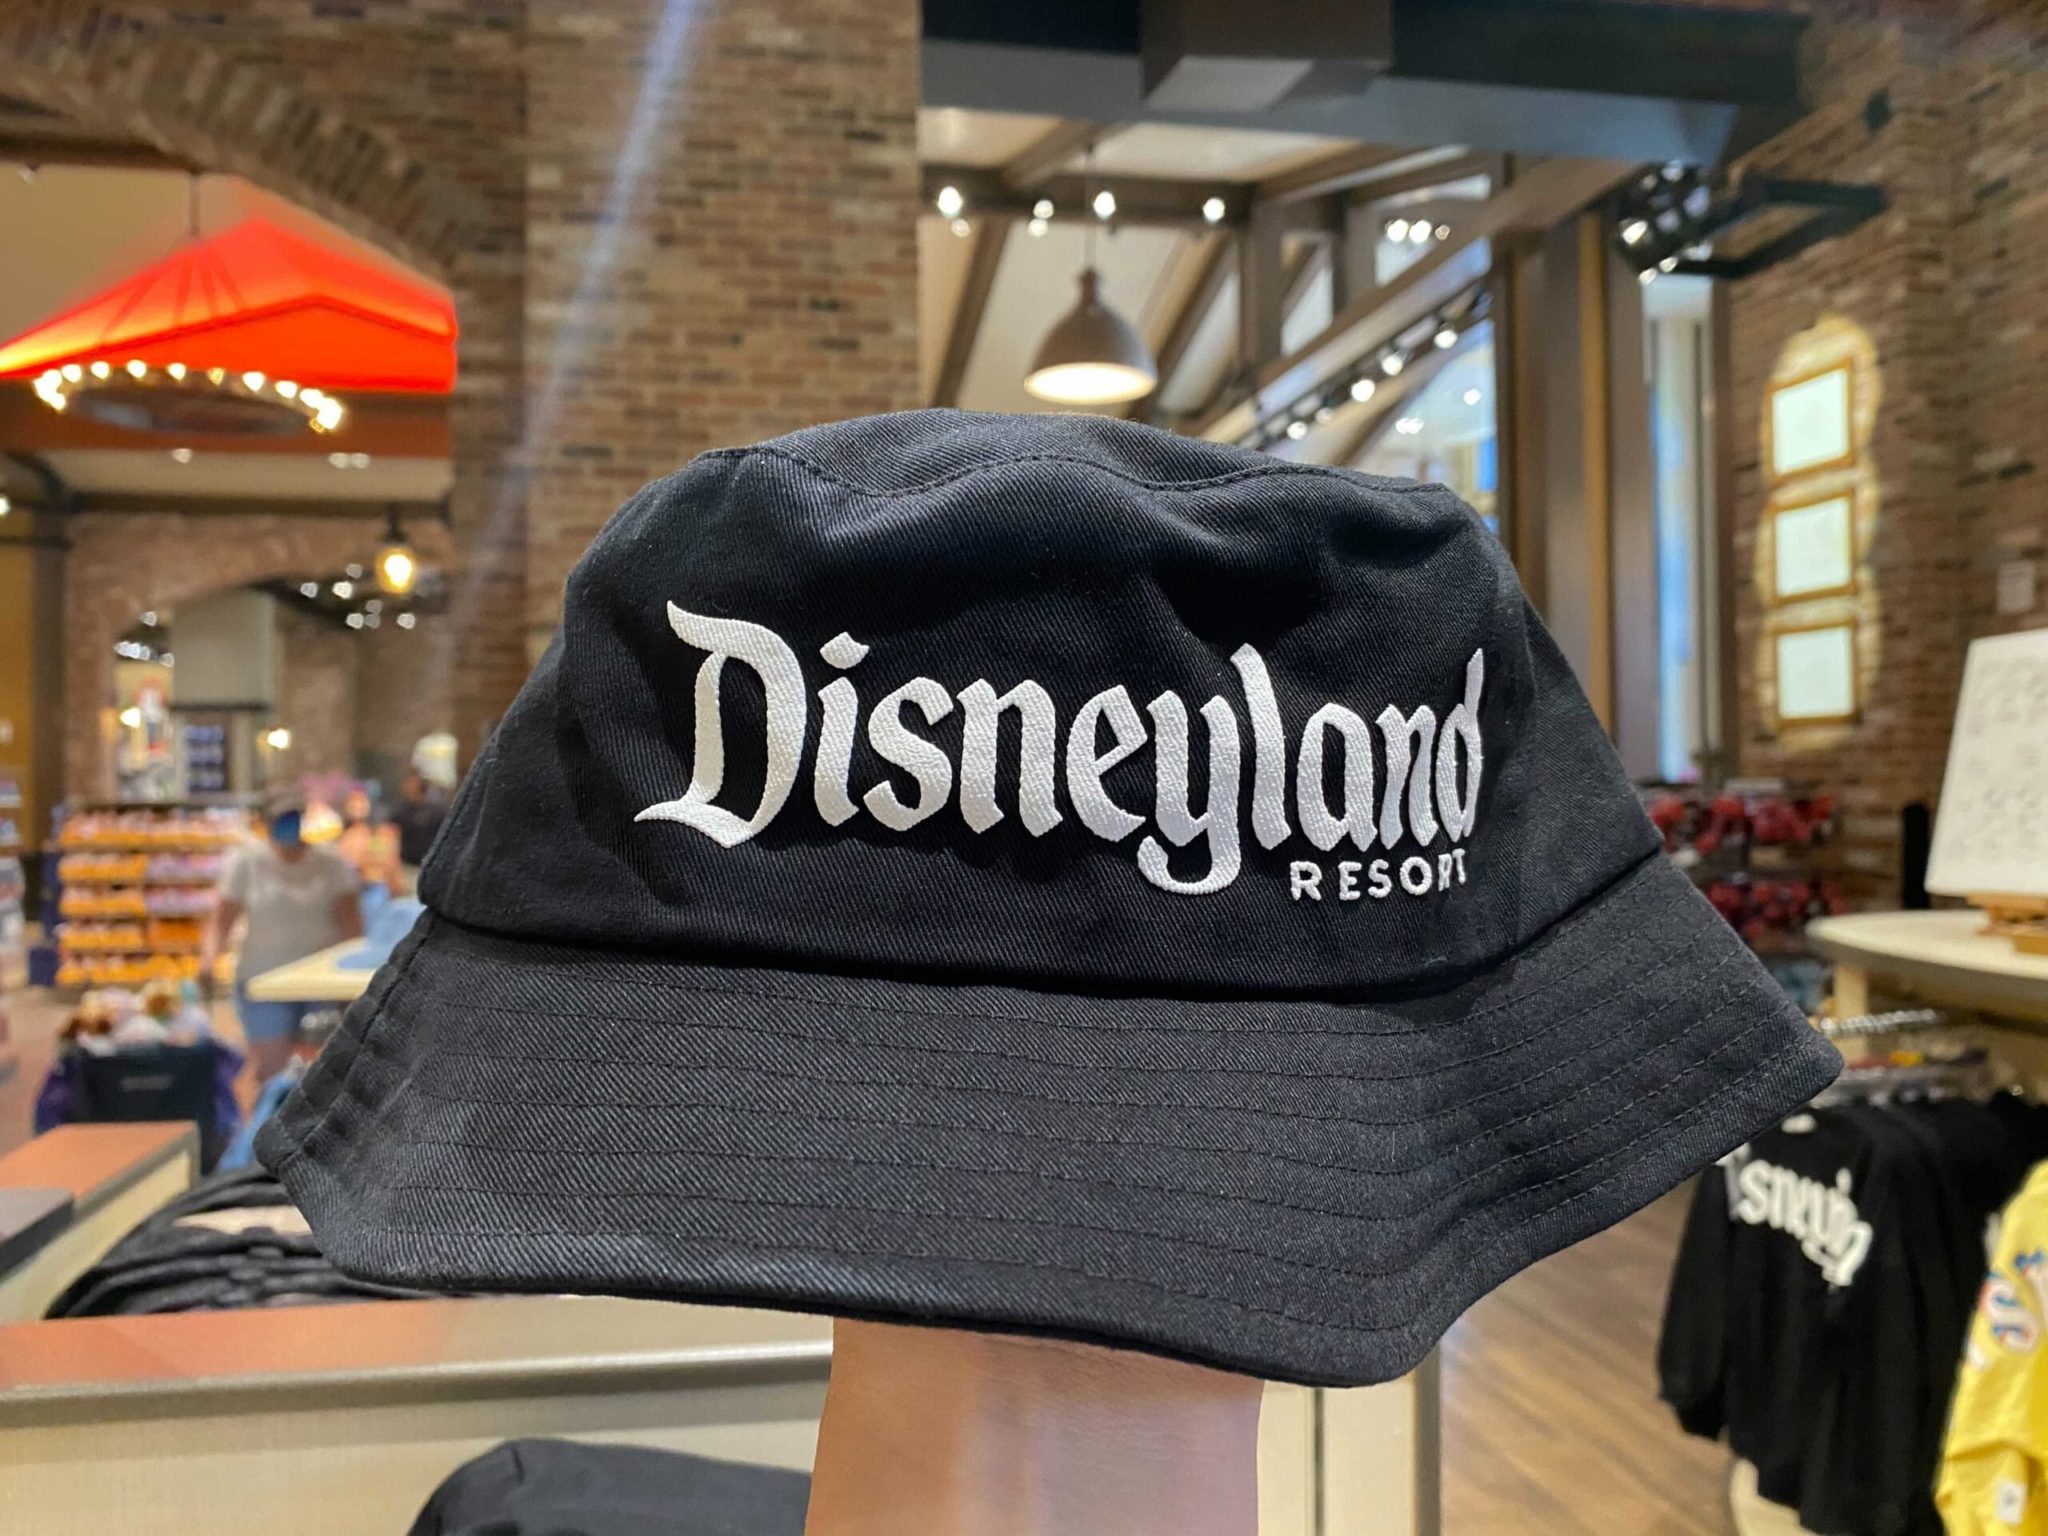 PHOTOS New Disneyland Resort Bucket Hat Joins Spirit